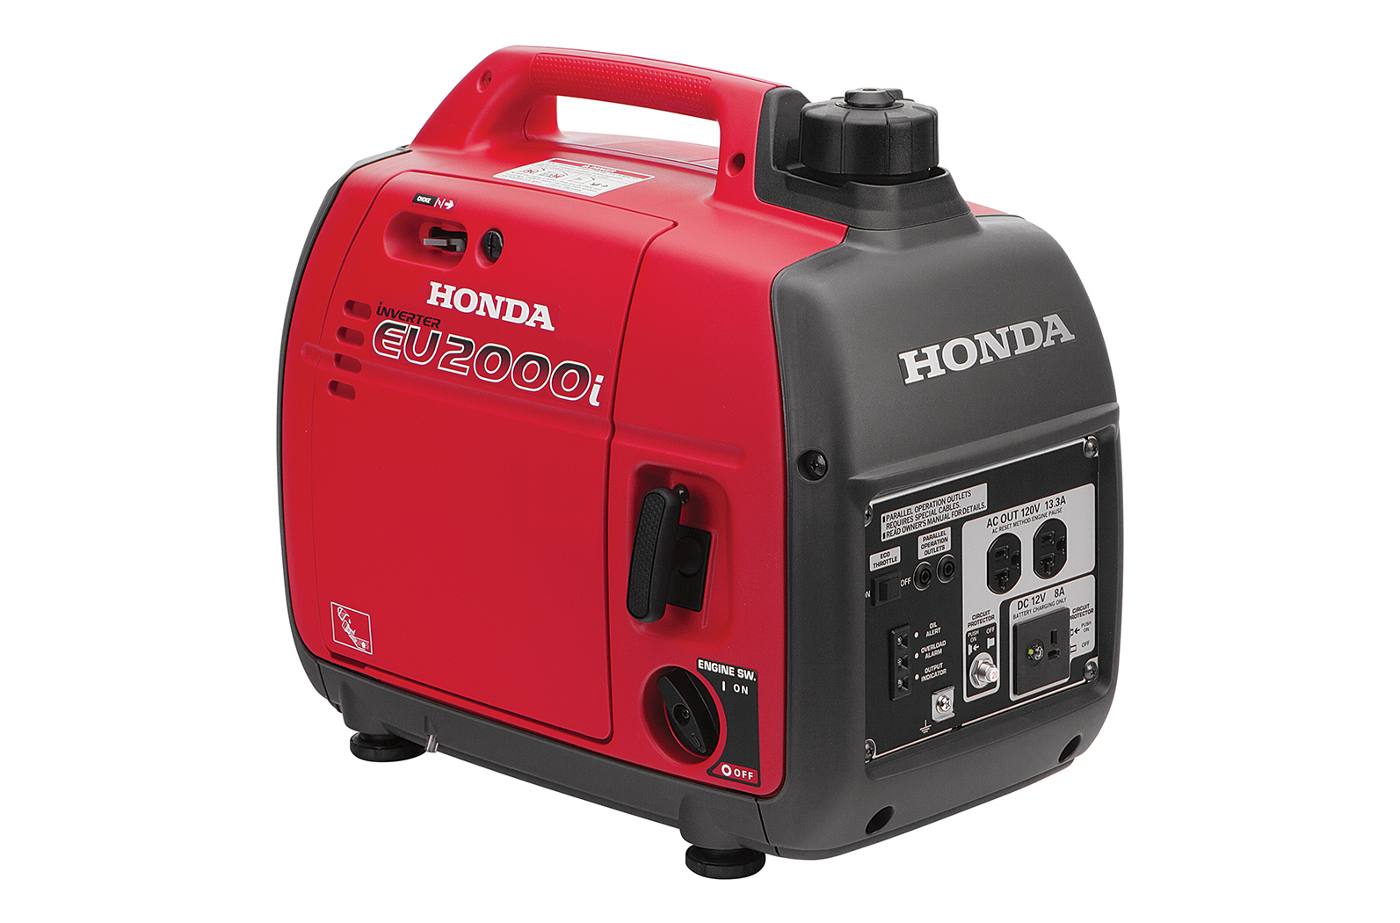 Honda Eu2000I Generator Specifications